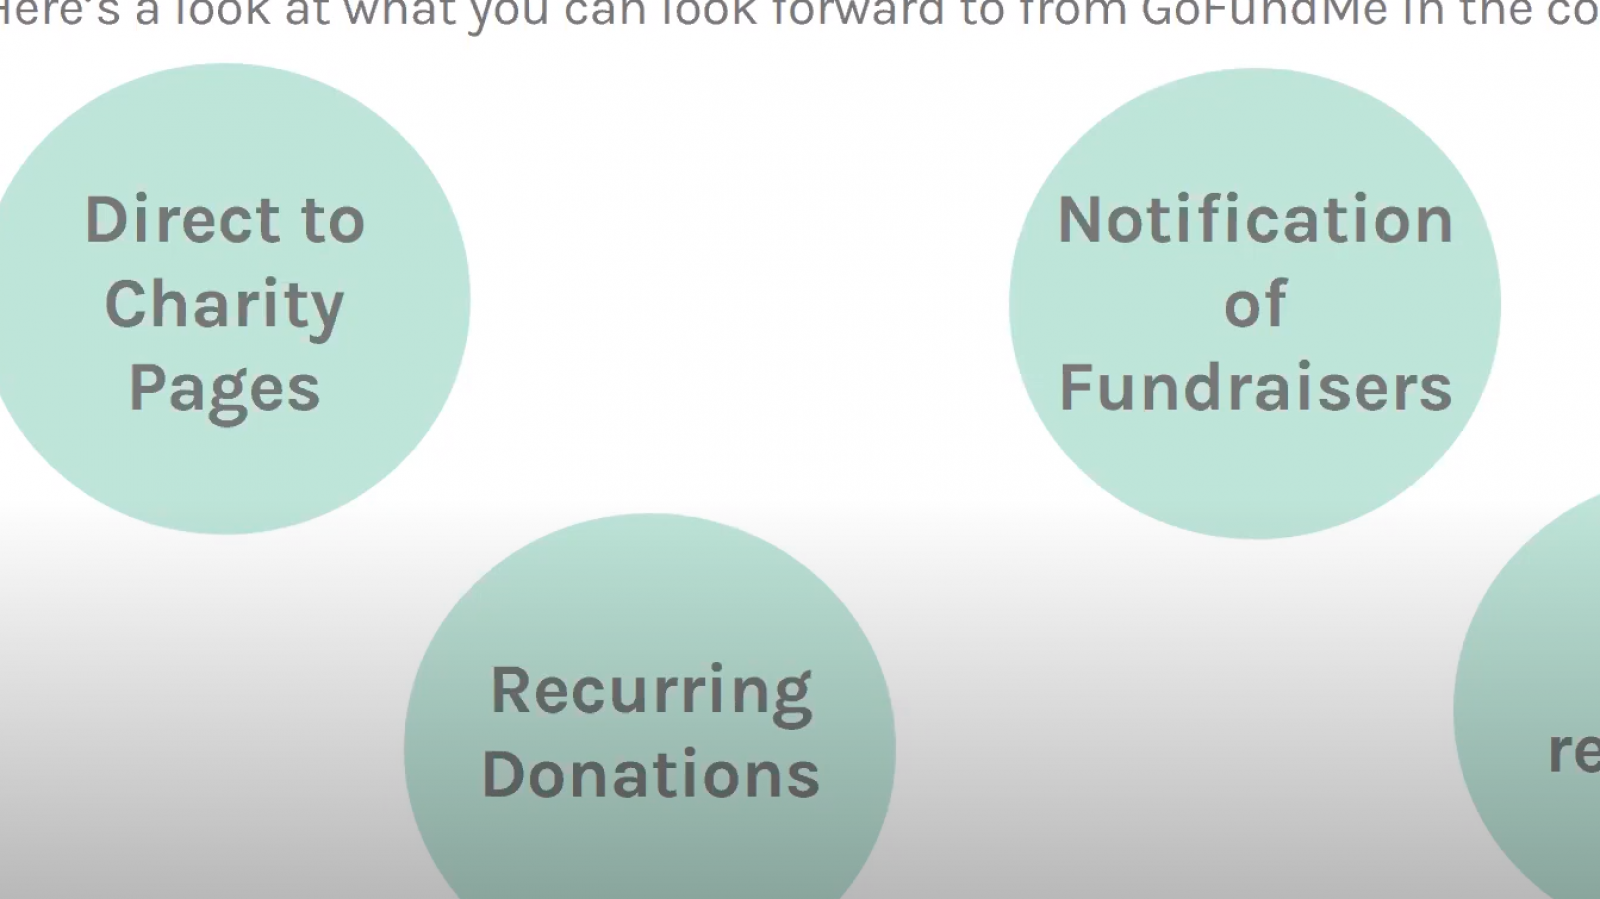 New Fundraising Tool By GoFundMe